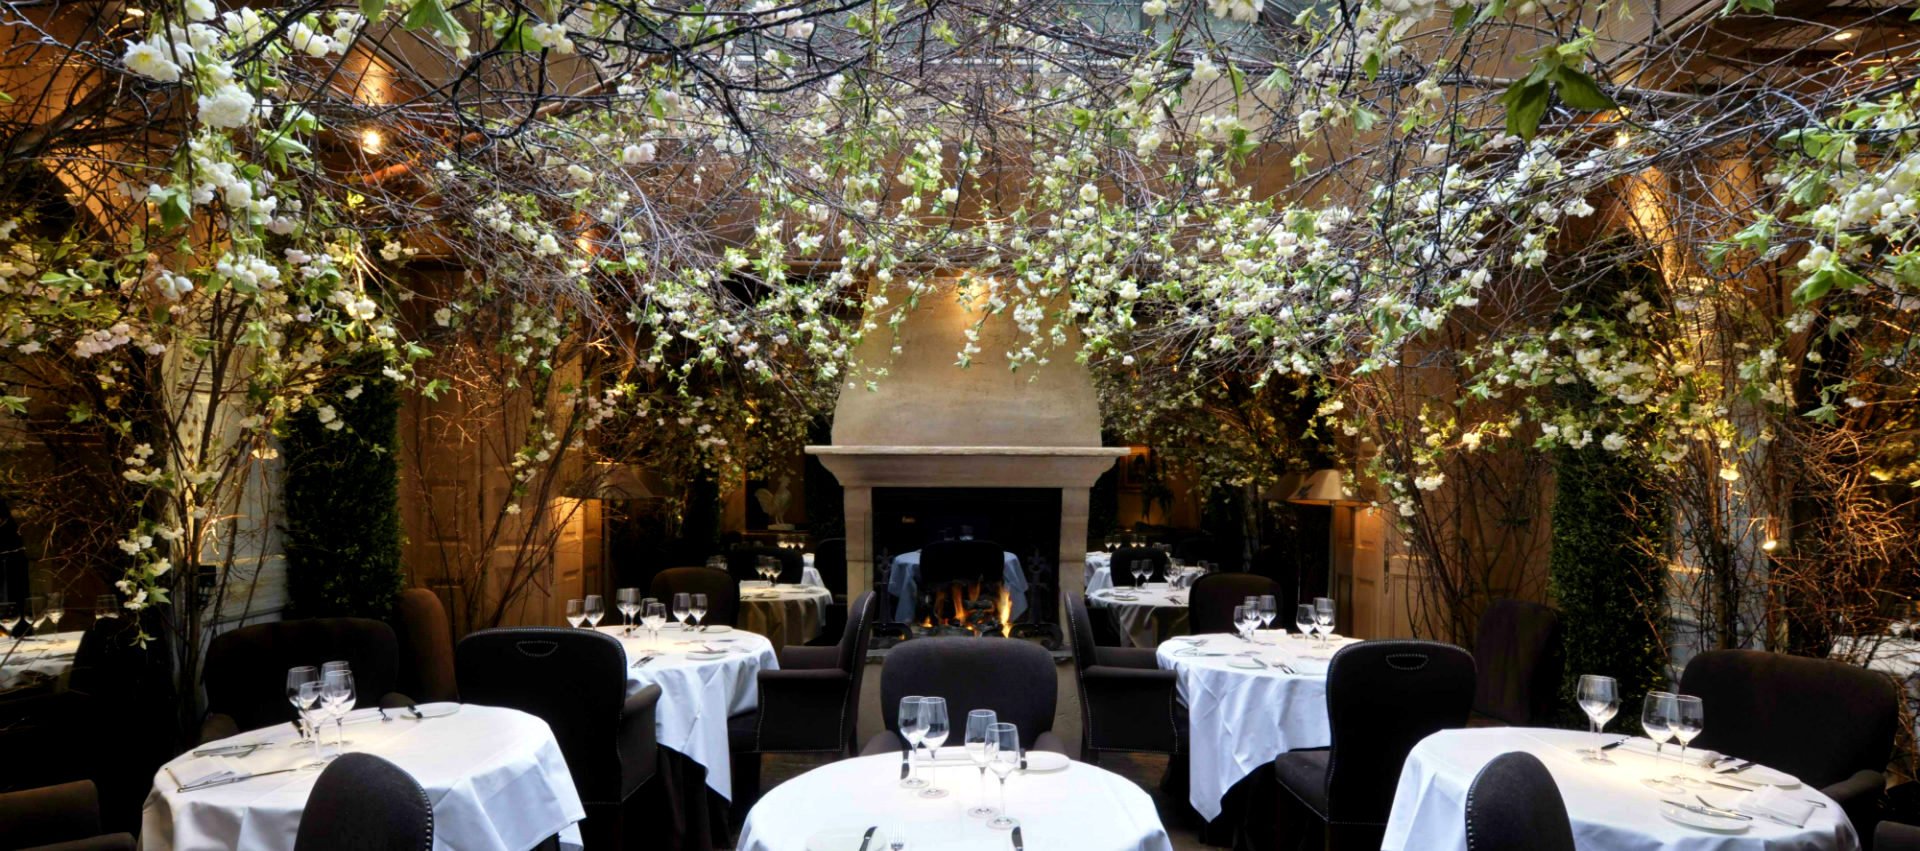 The Best Covent Garden Restaurants | The Nudge London